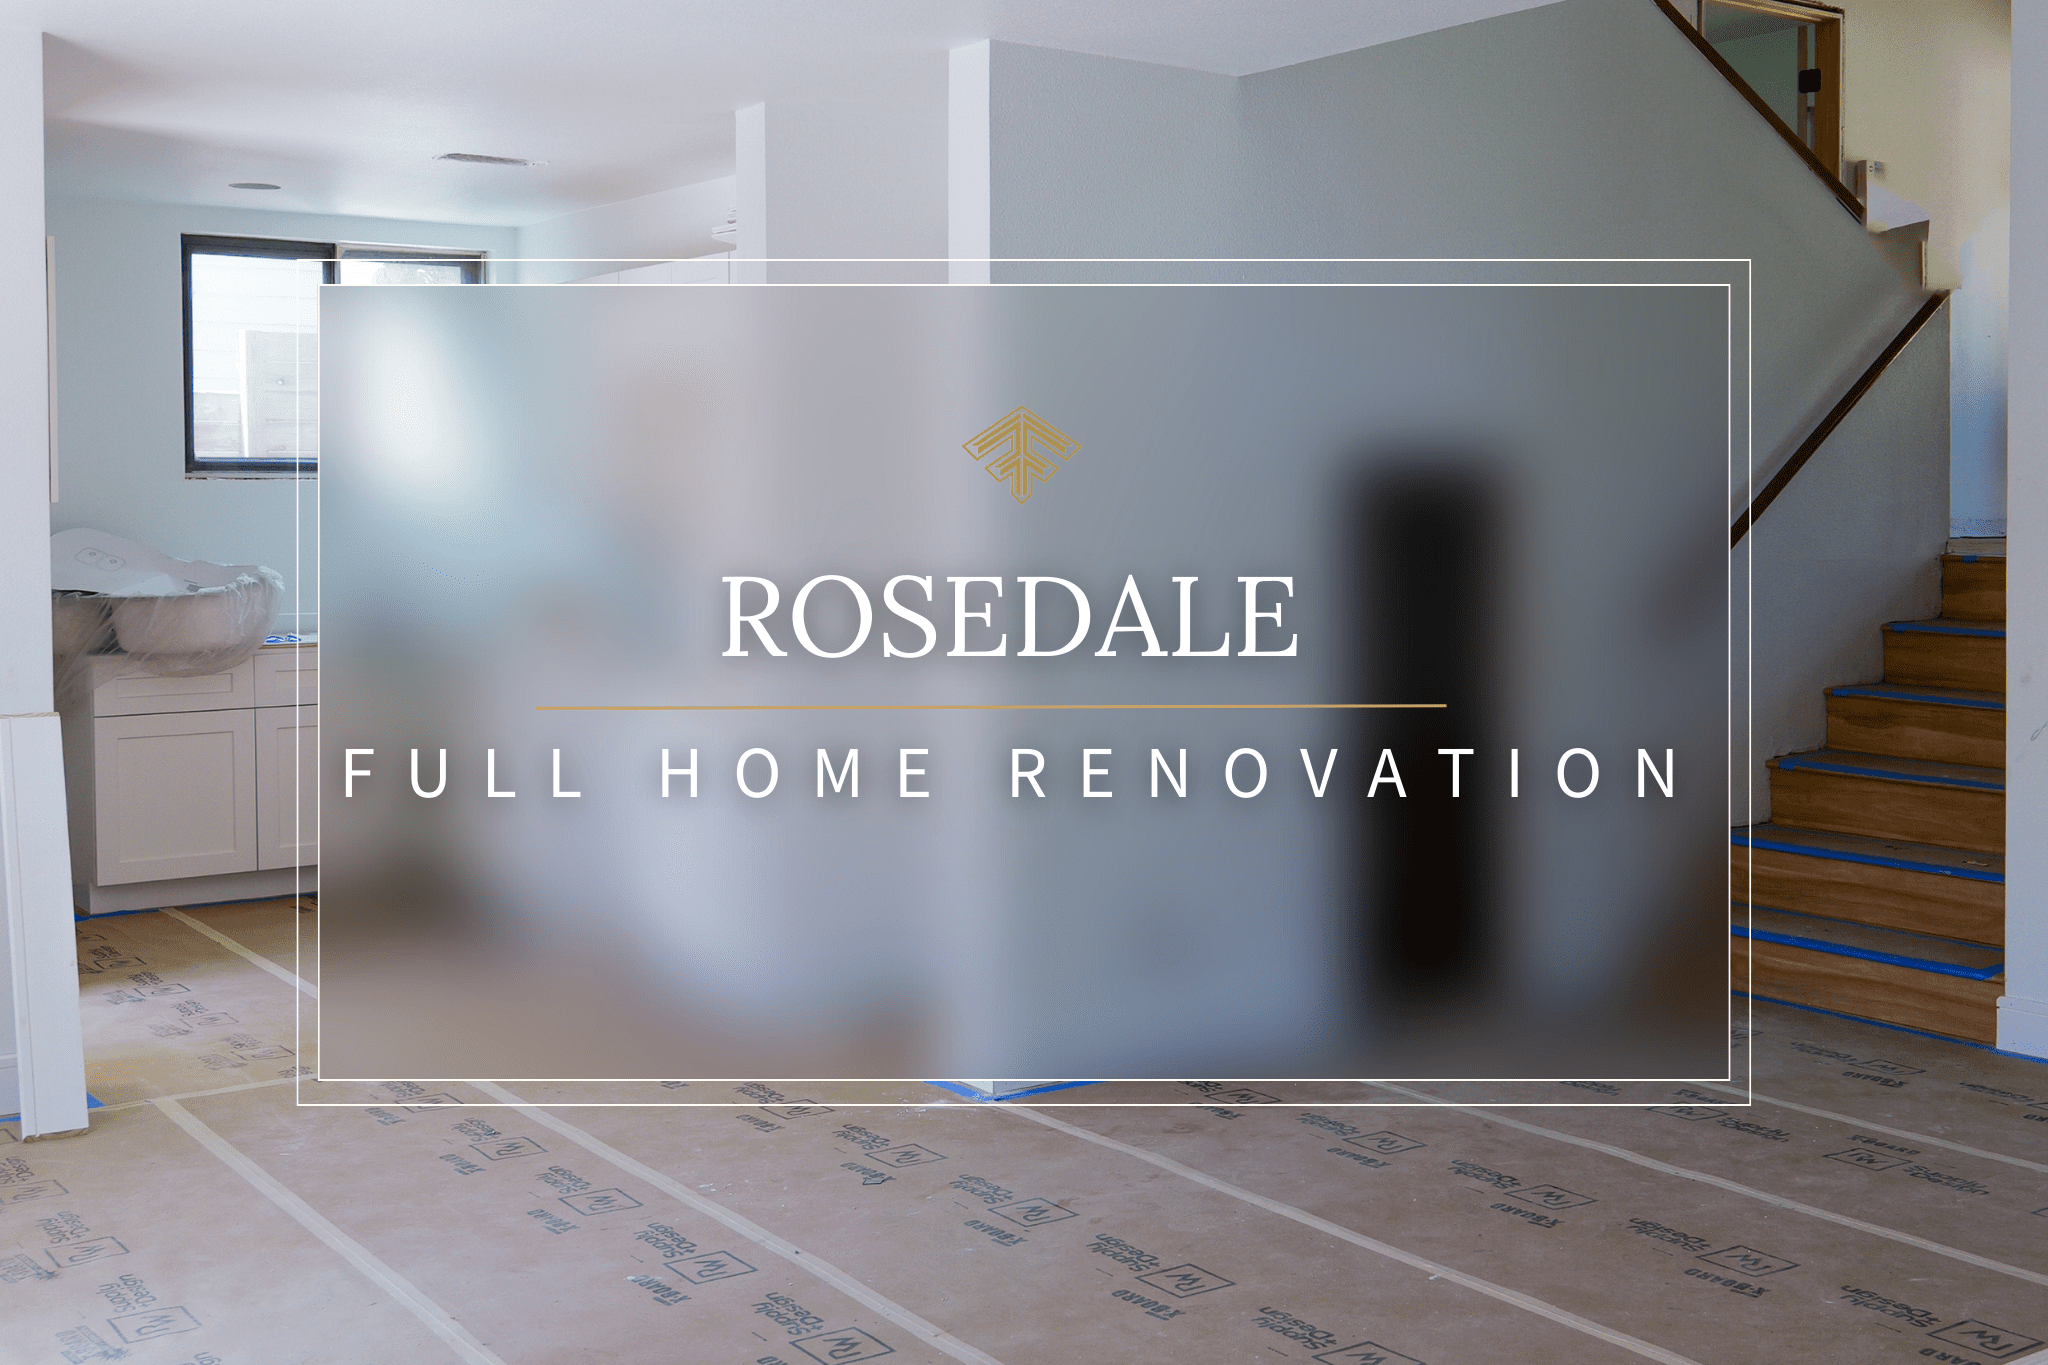 Freccia Group Rosedale Full Home Renovation blog header graphic image - living room